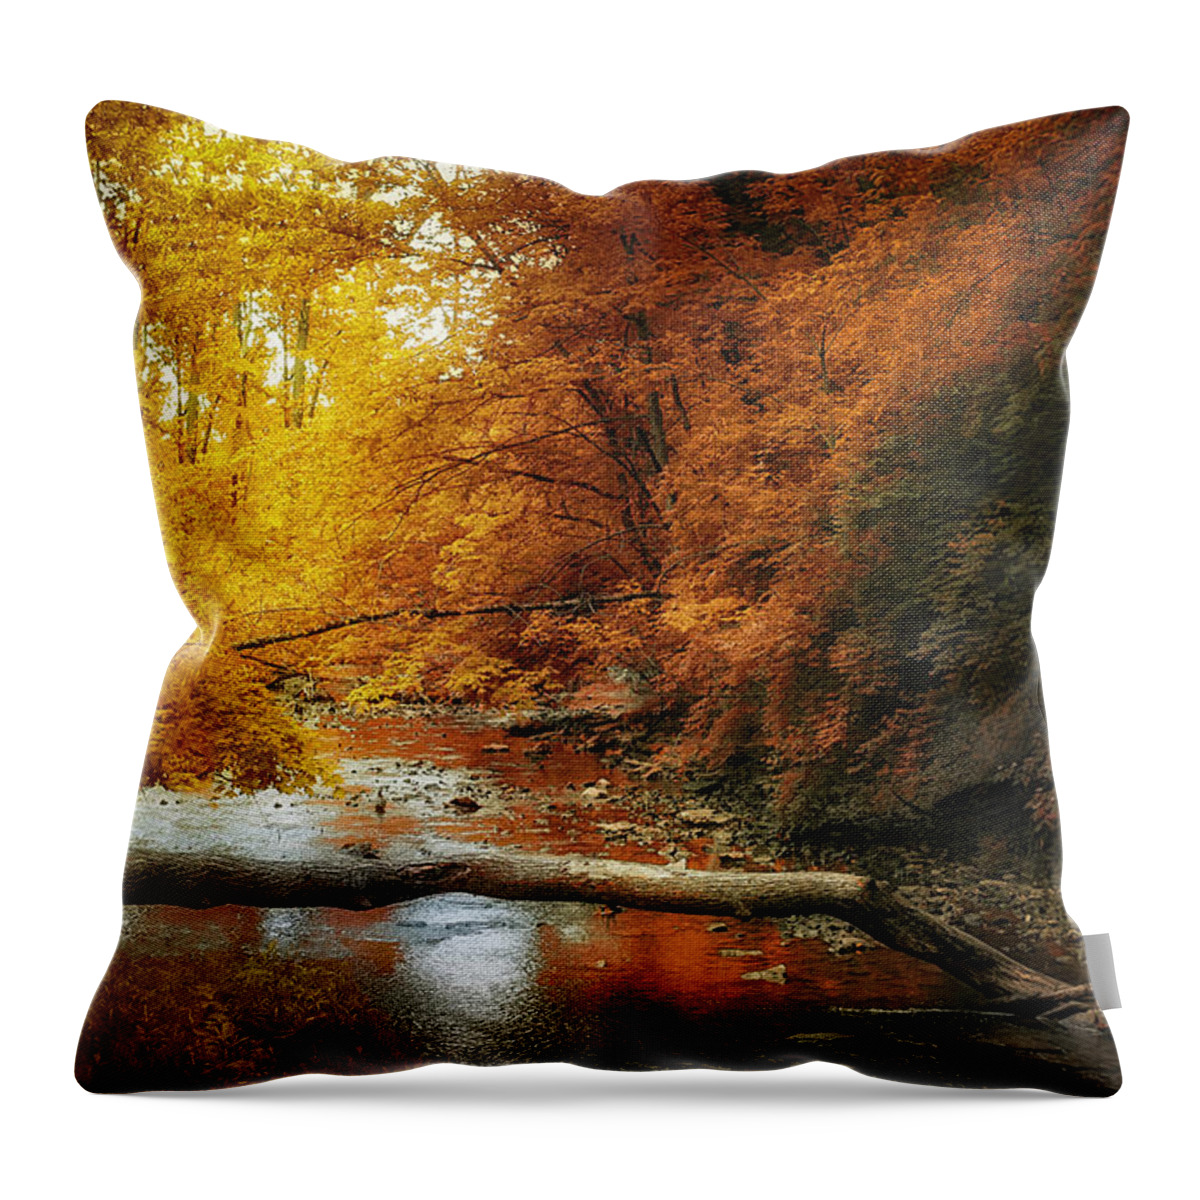 Stream Throw Pillow featuring the photograph Woodland Stream by Tom Mc Nemar